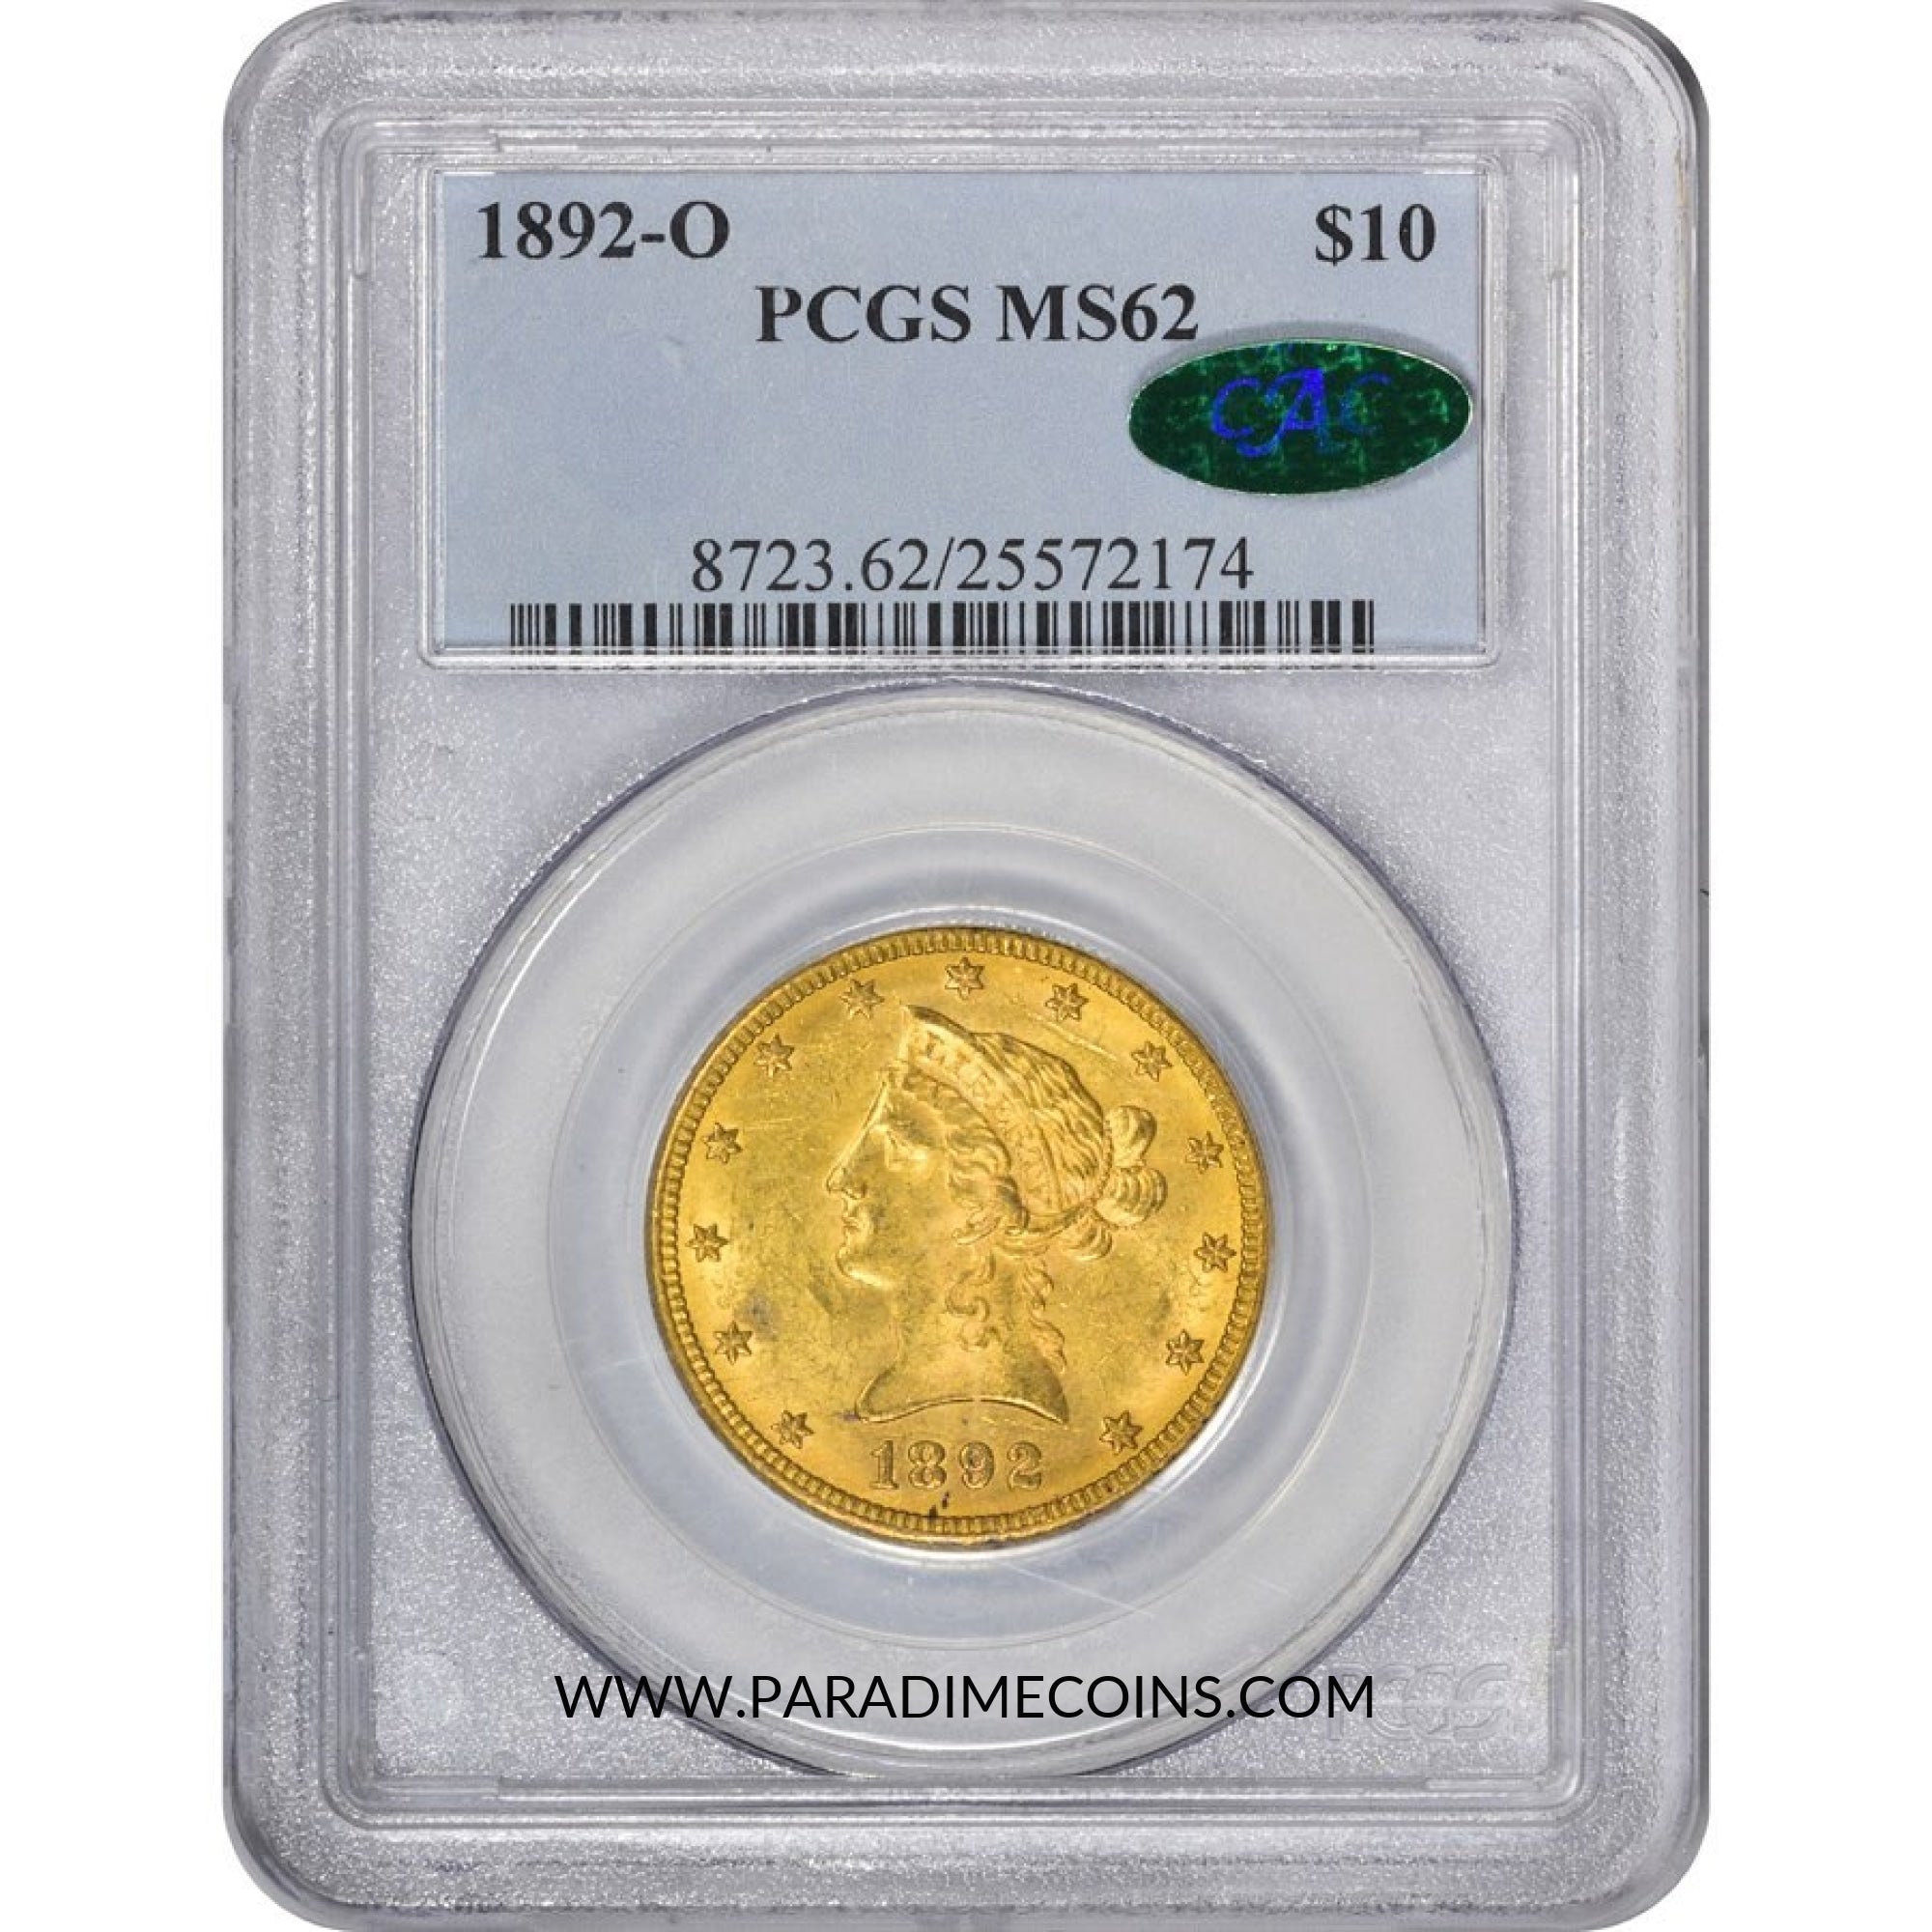 1892-O $10 MS62 PCGS CAC - Paradime Coins | PCGS NGC CACG CAC Rare US Numismatic Coins For Sale